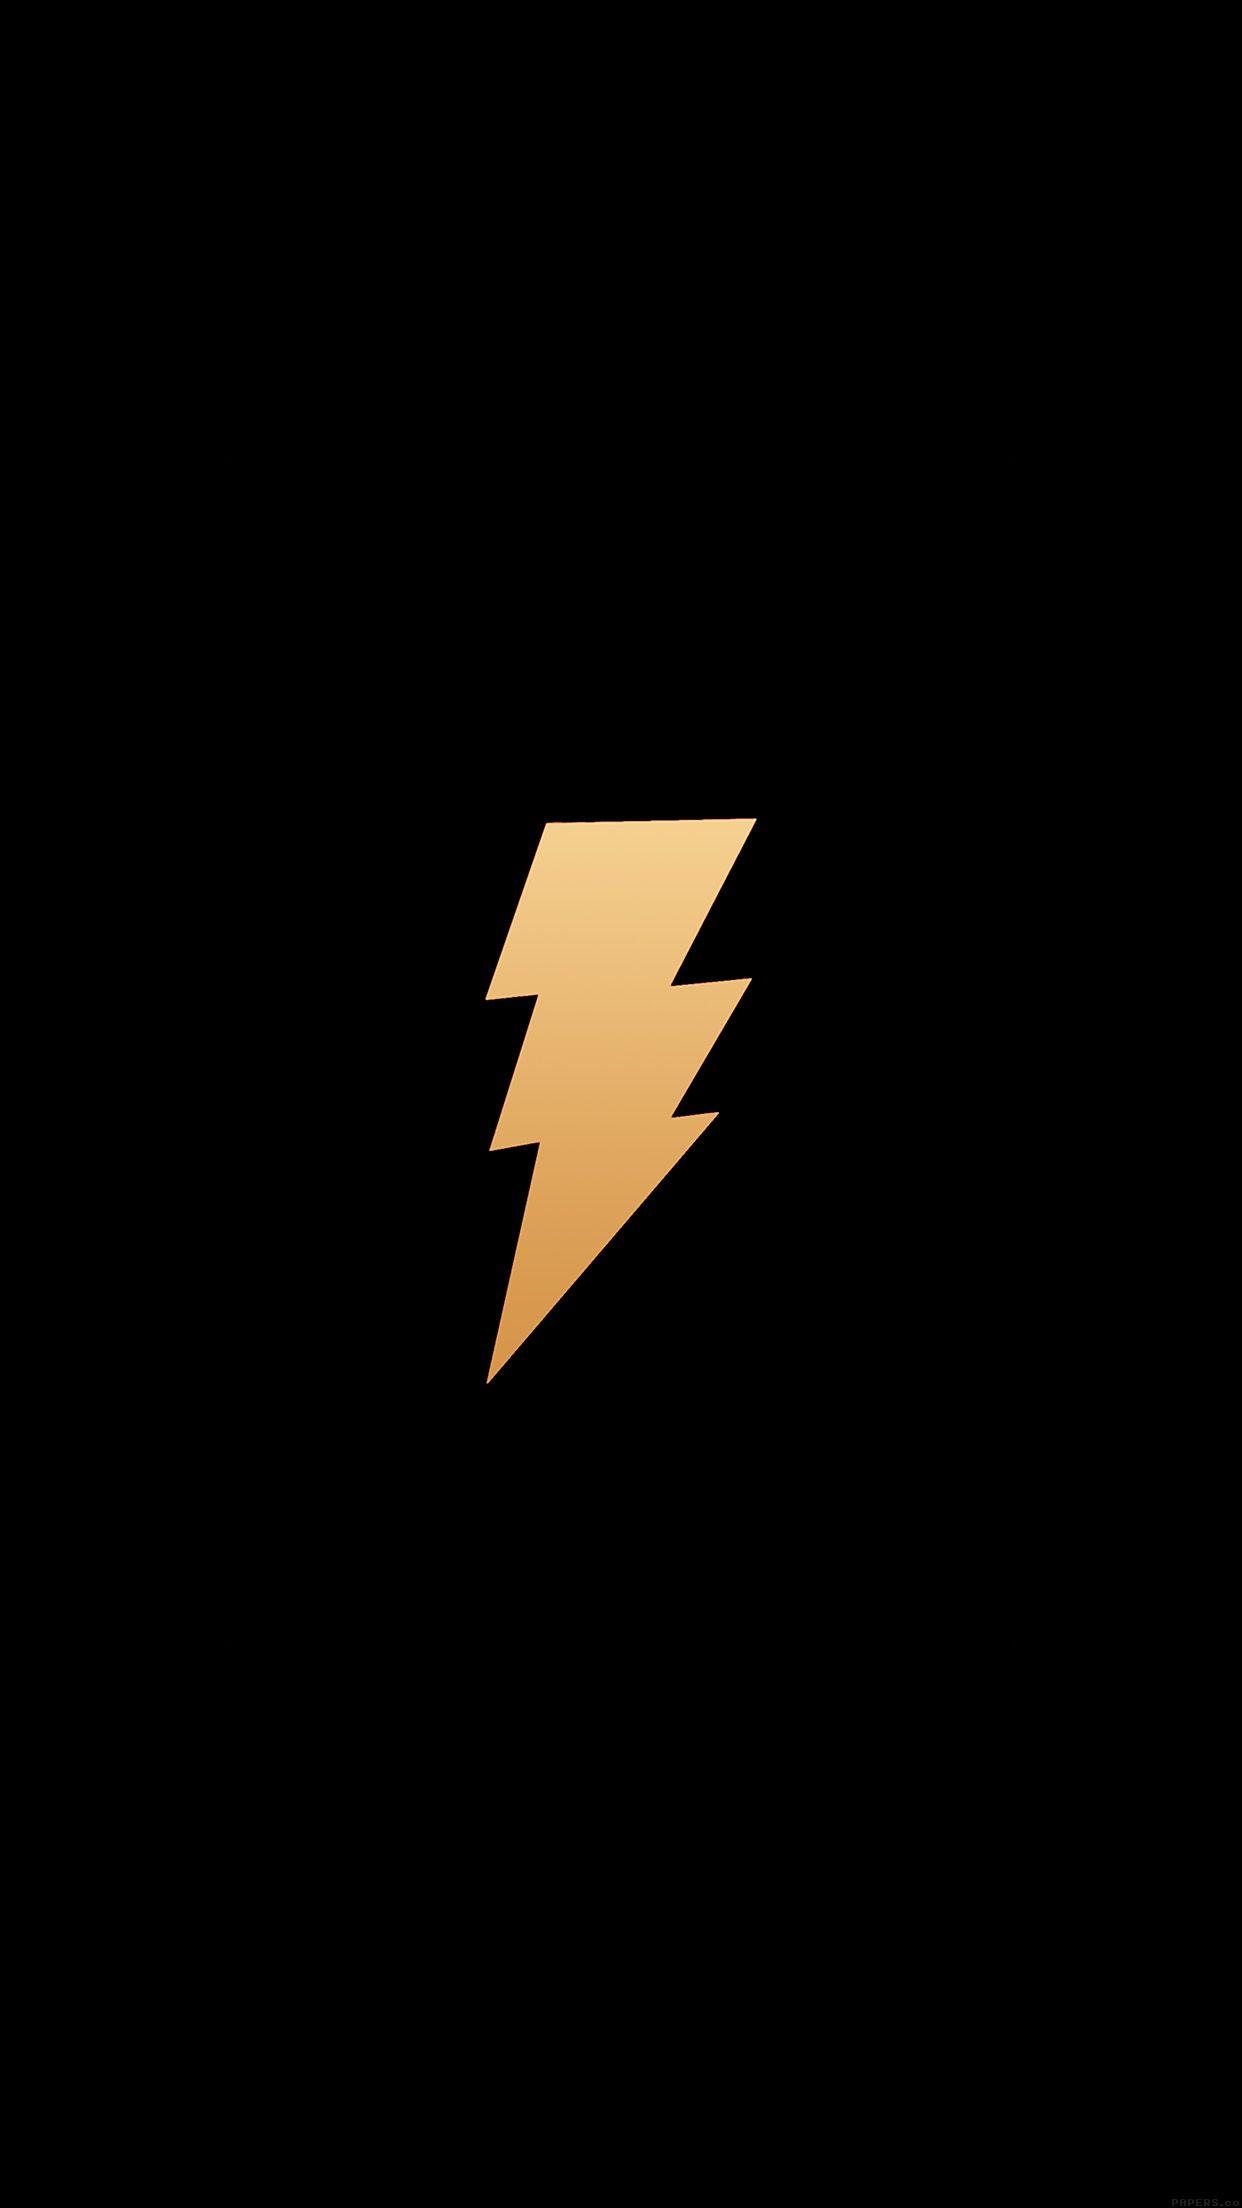 Cool Thunder Bolt Minimal Dark Logo Art Iphone6 Plus Wallpaper